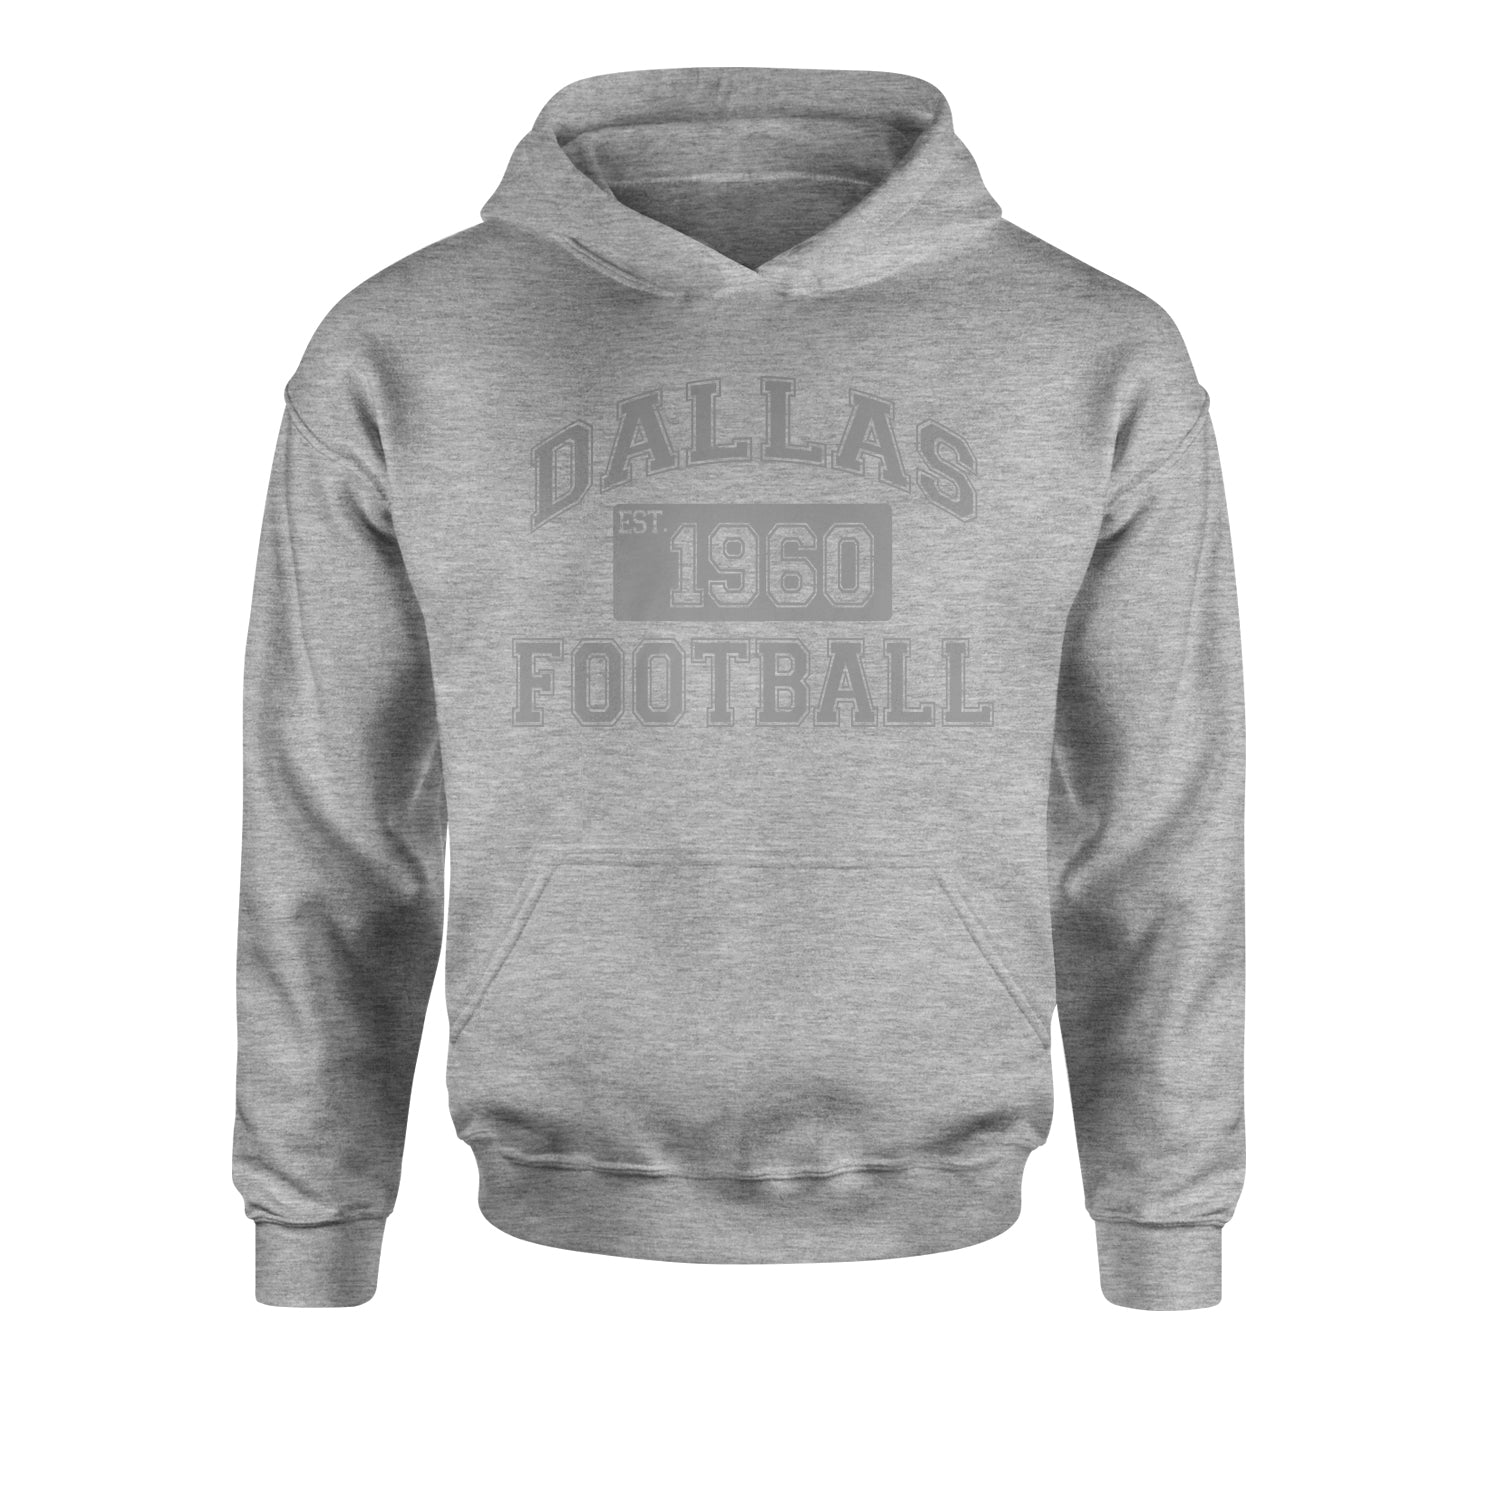 Dallas Football Established 1960 Youth-Sized Hoodie boys, dem by Expression Tees